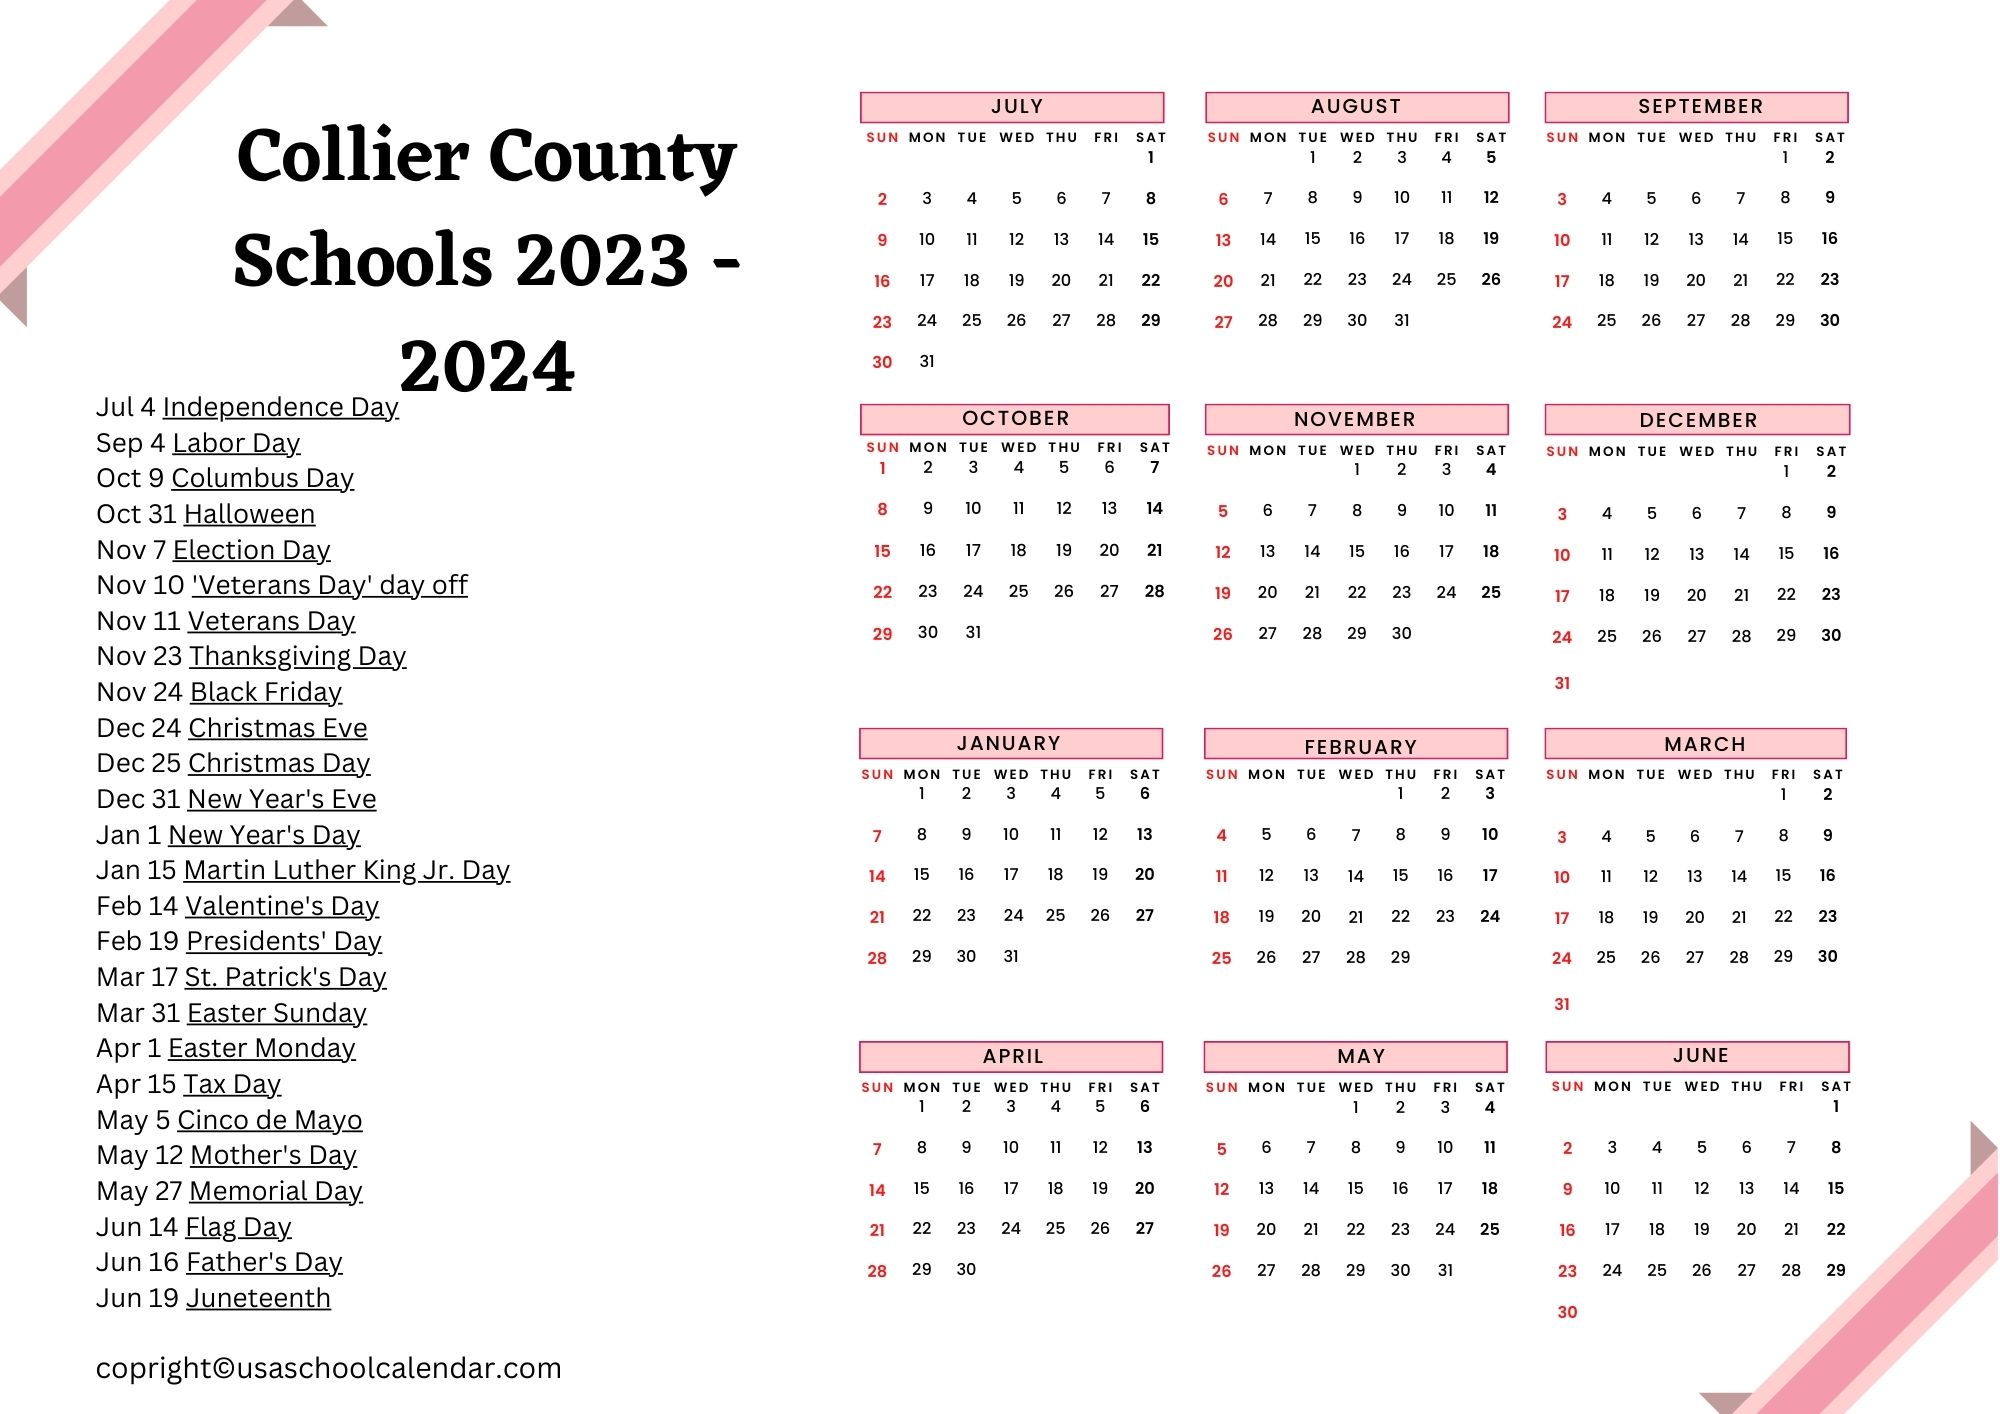 Collier County Schools Calendar Holidays 2023 2024